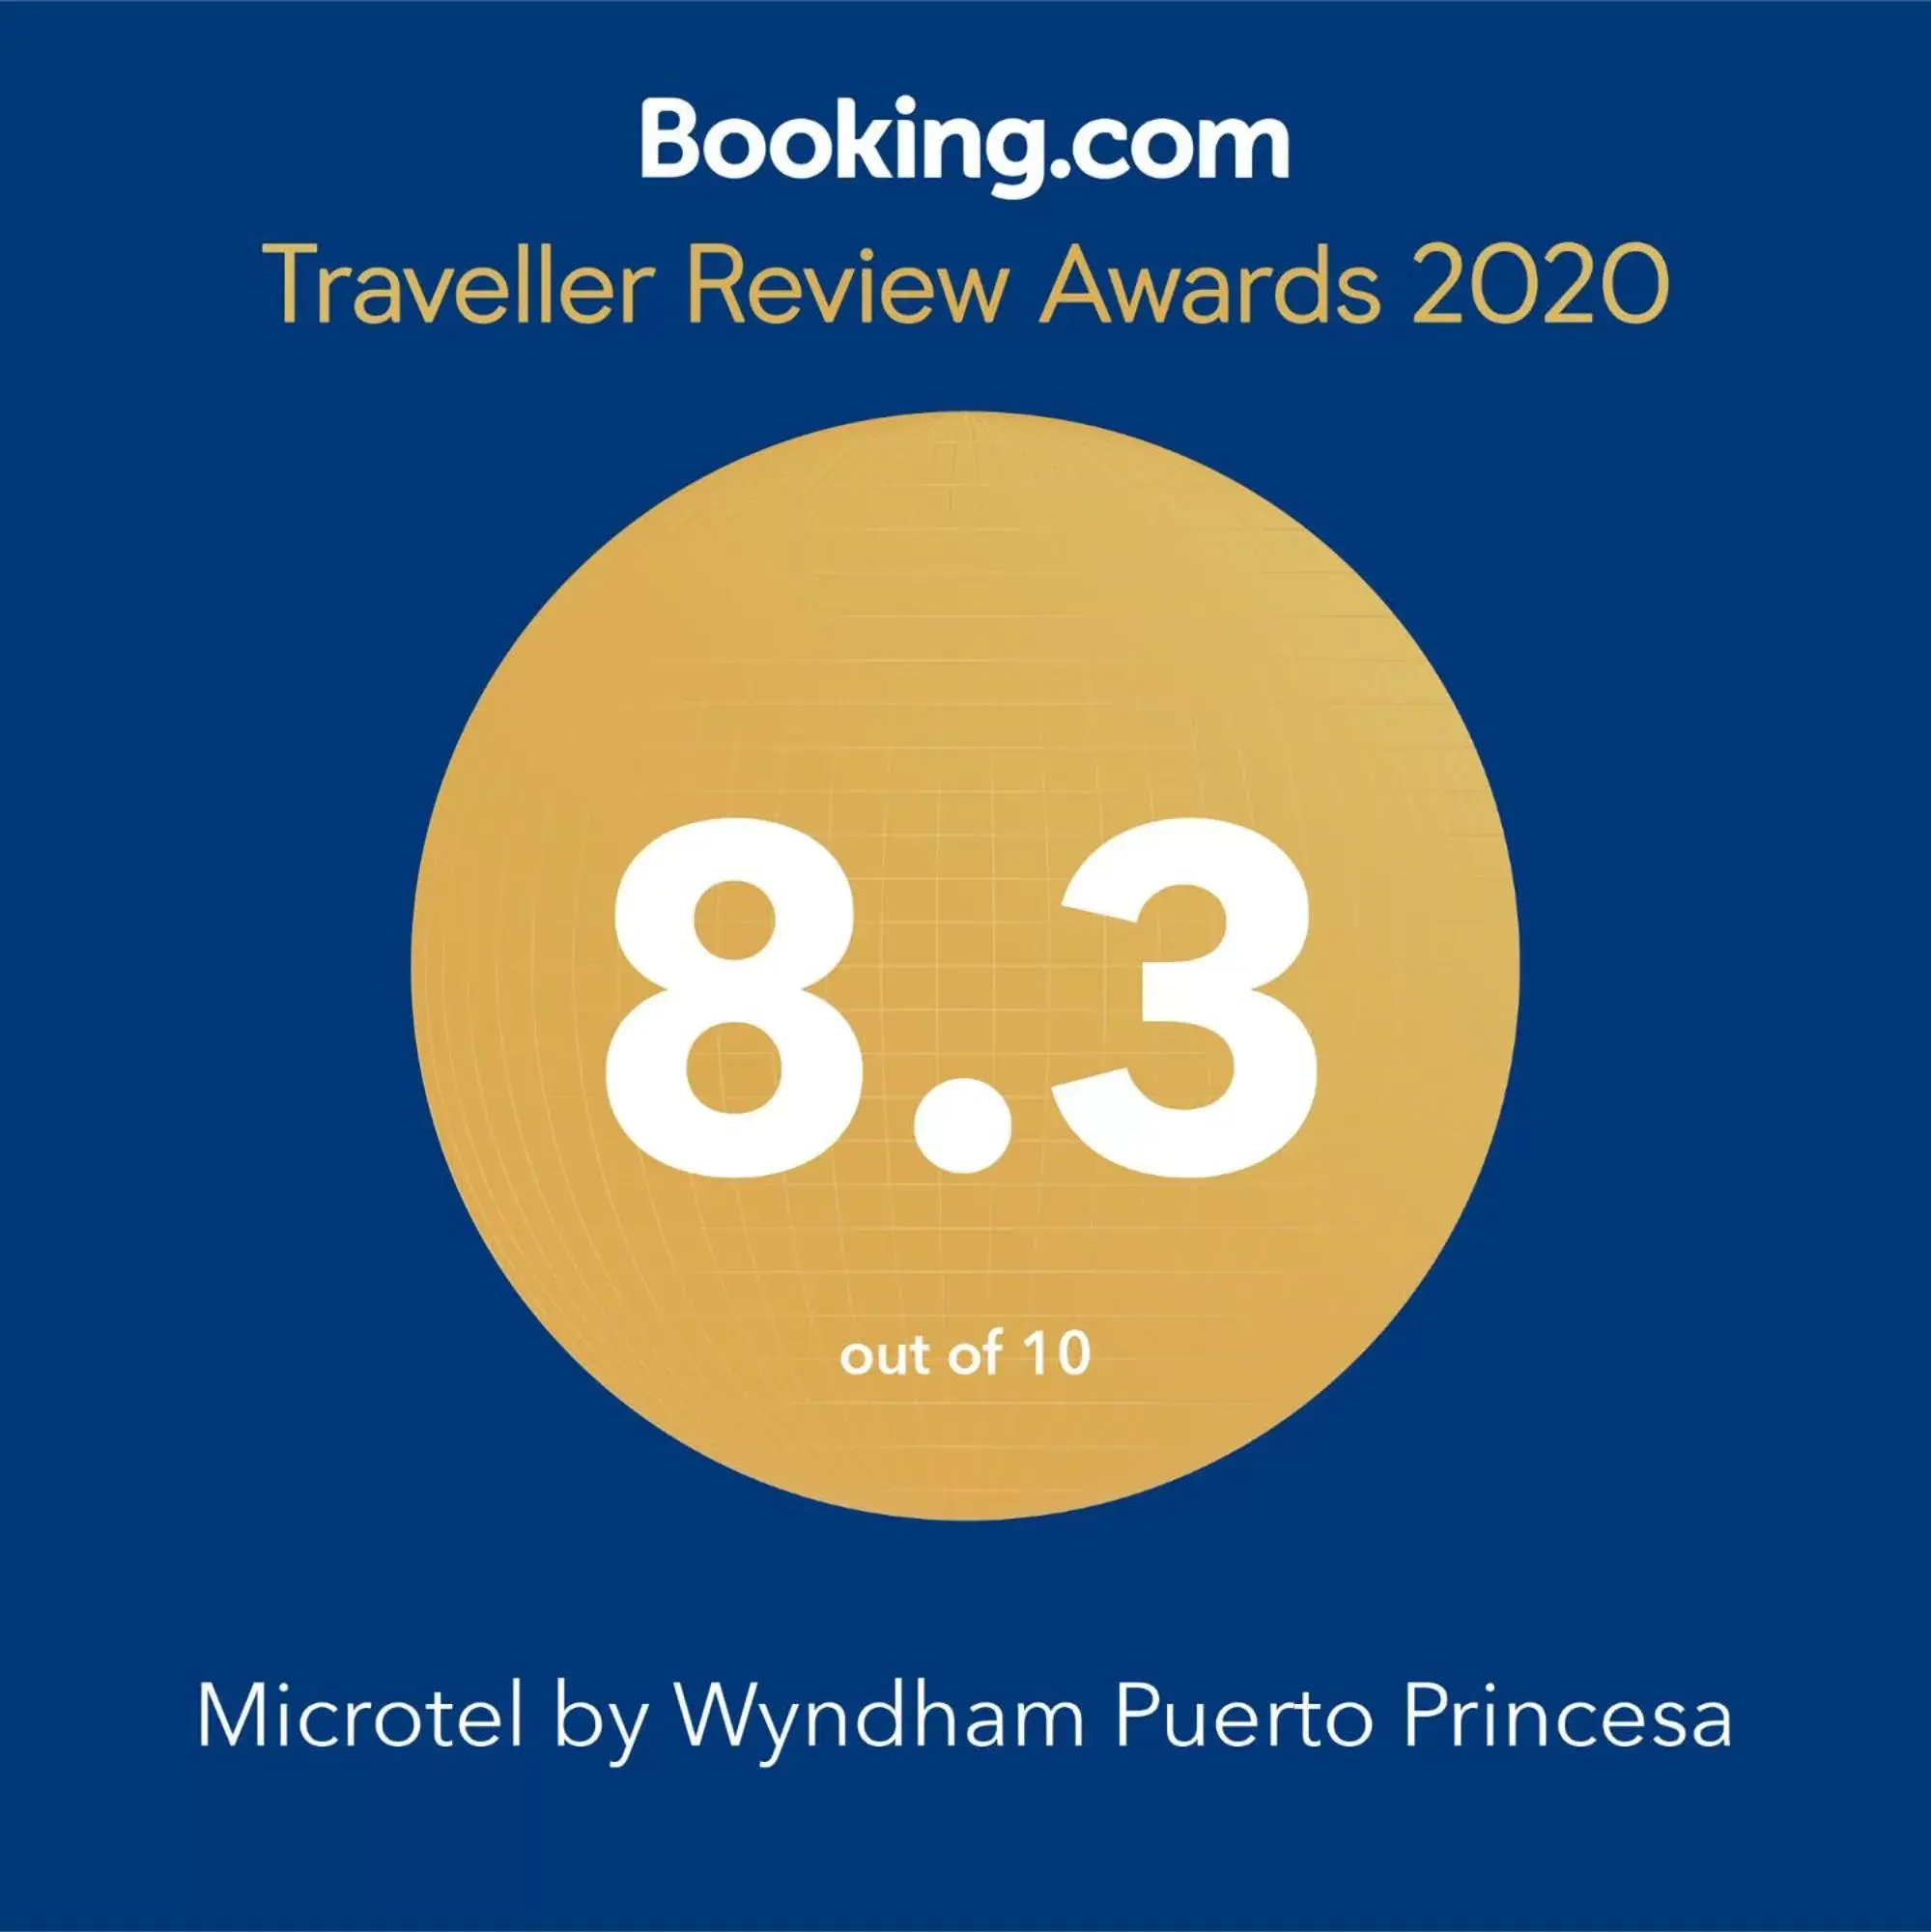 Certificate/Award in Microtel by Wyndham Puerto Princesa